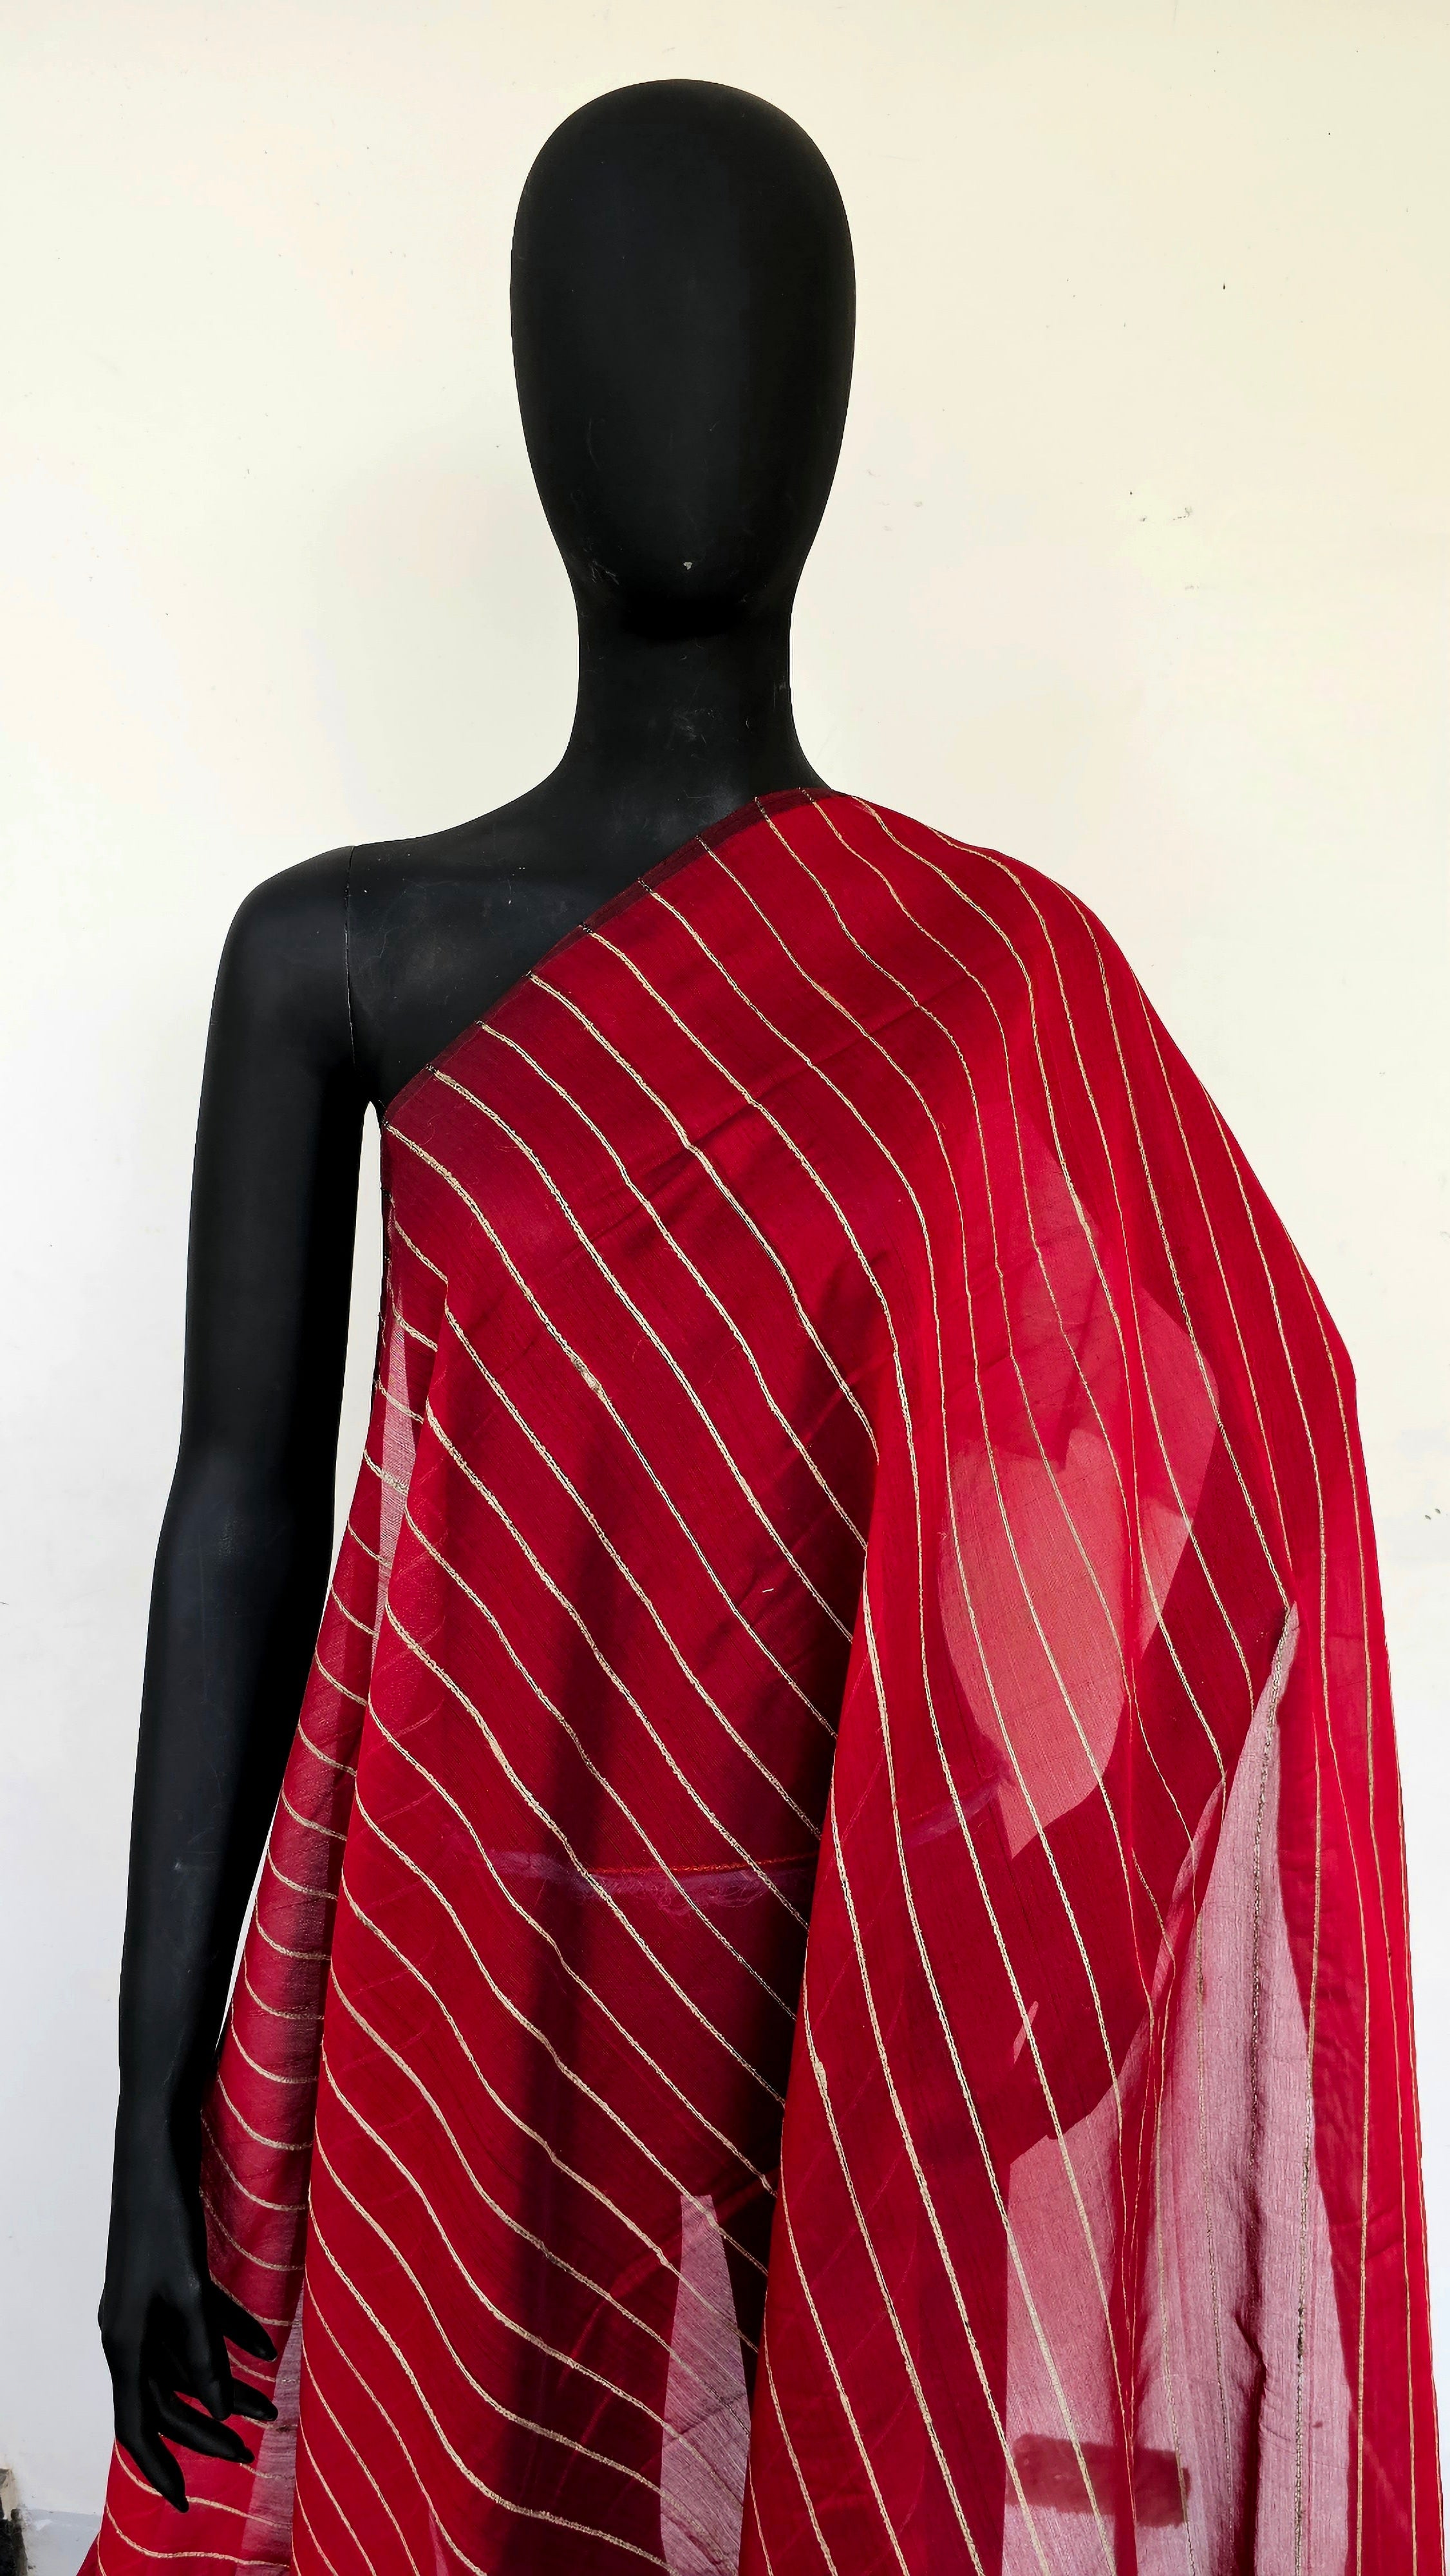 Maroon & Gichha Tussar Stripes Fabric: Your Canvas for Endless Garment Creativity